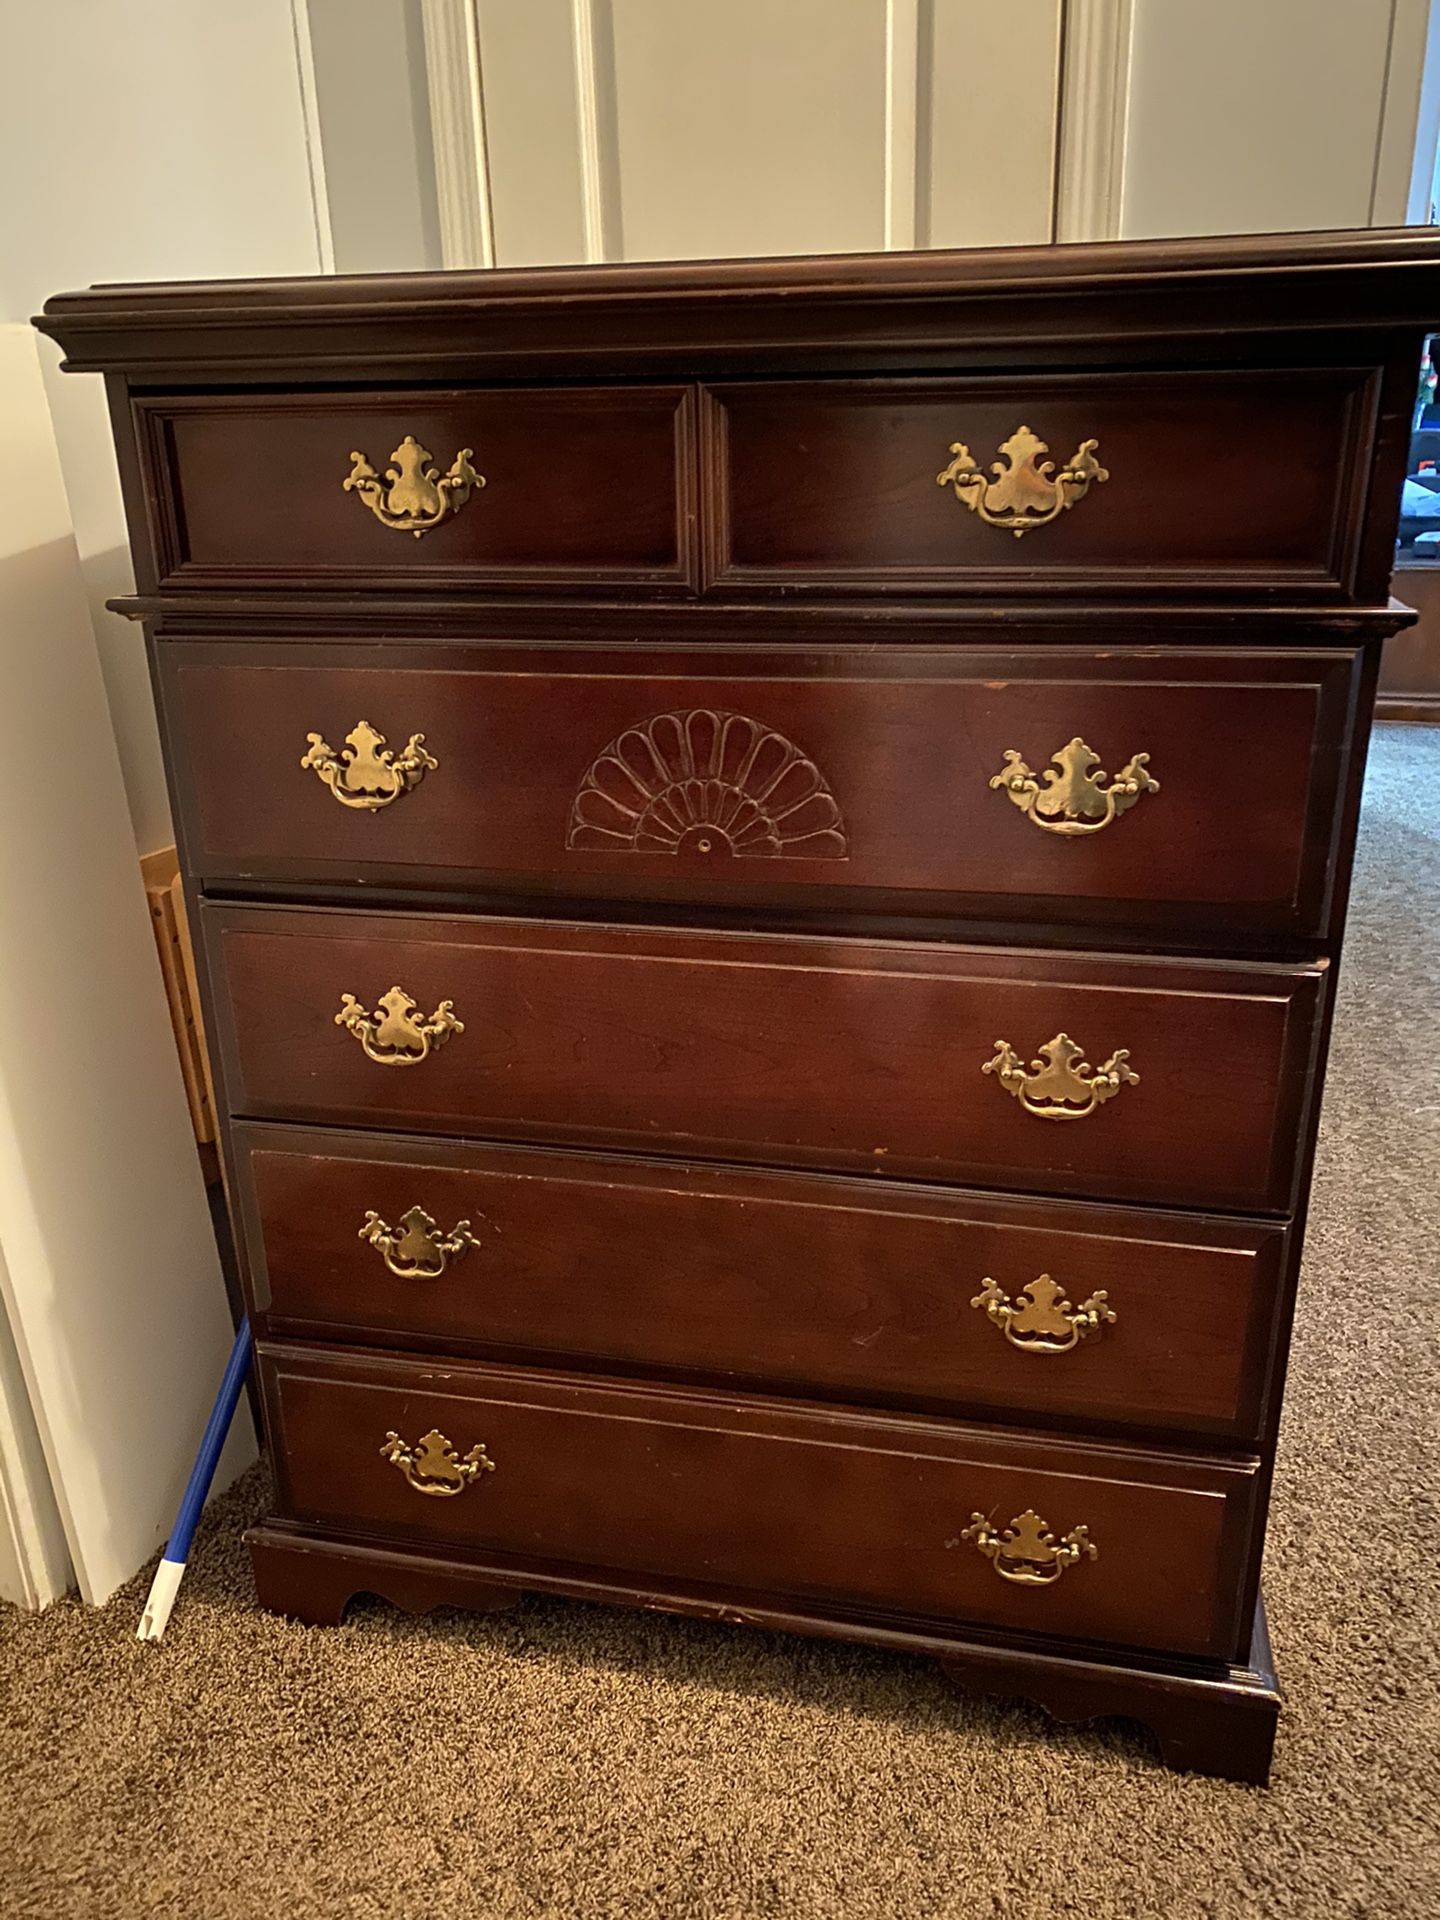 Nice 5 drawer chest